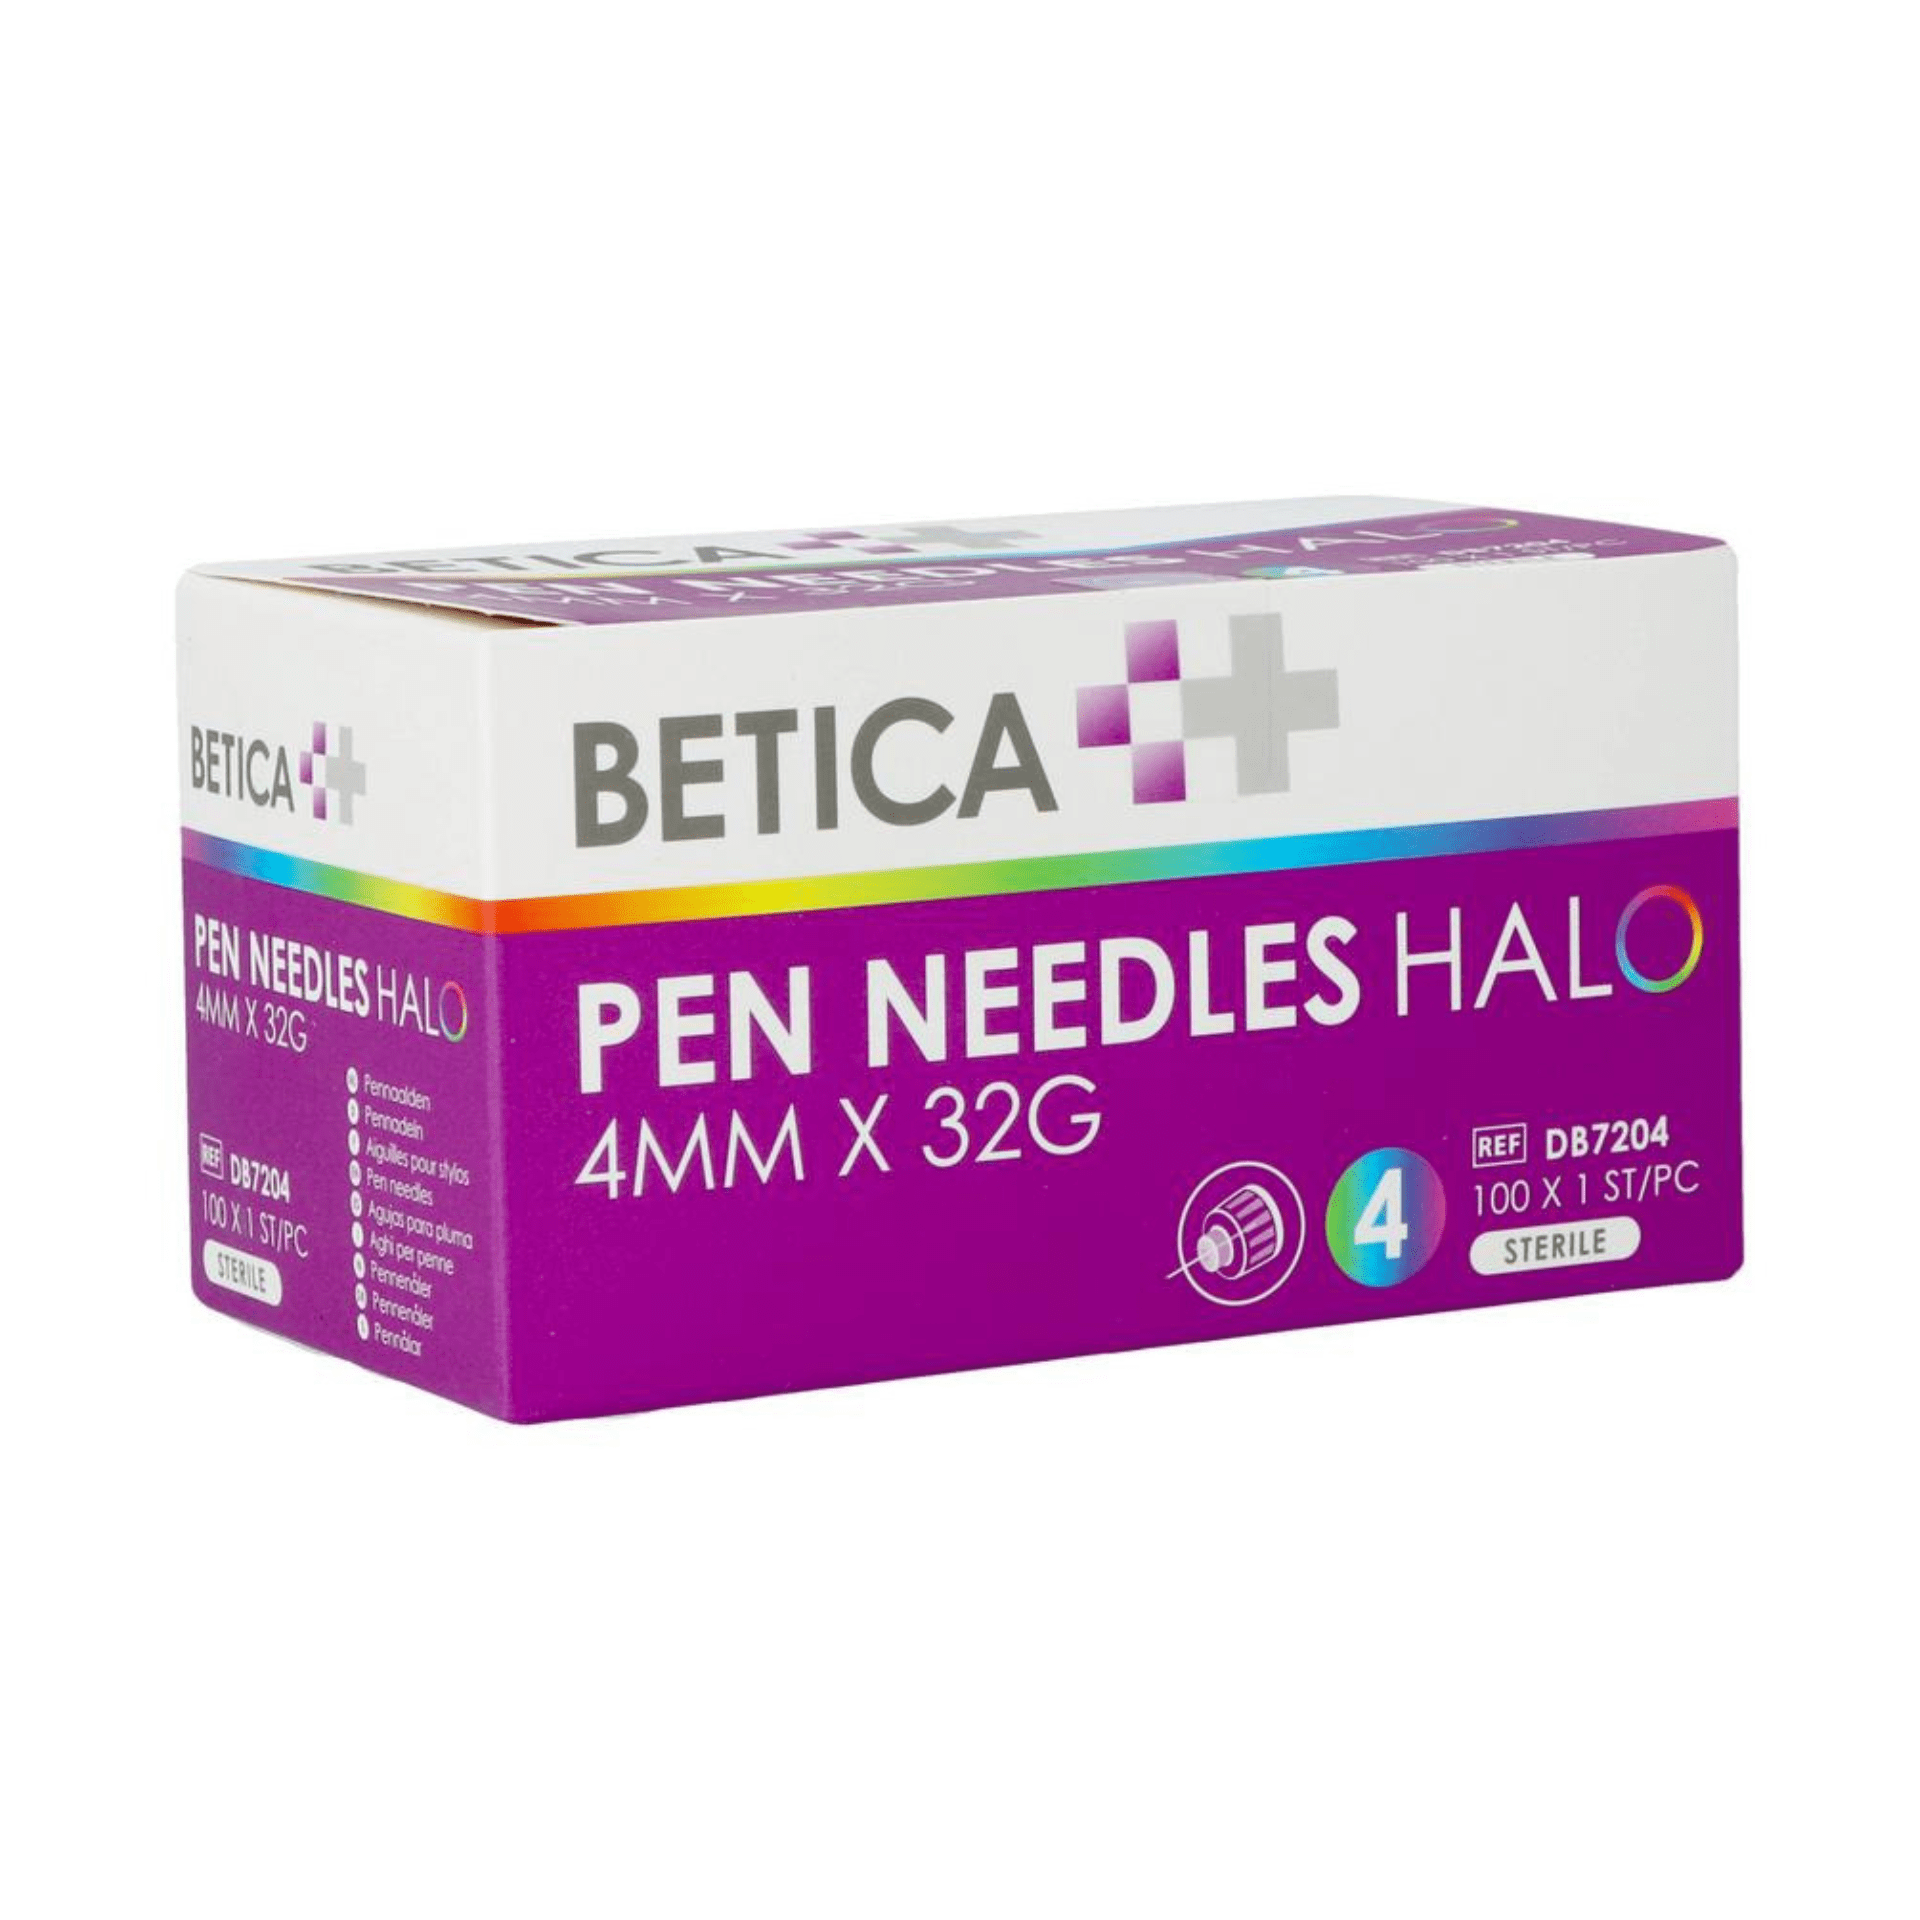 Betica Pen Needles Halo 4 mm x 32 g 